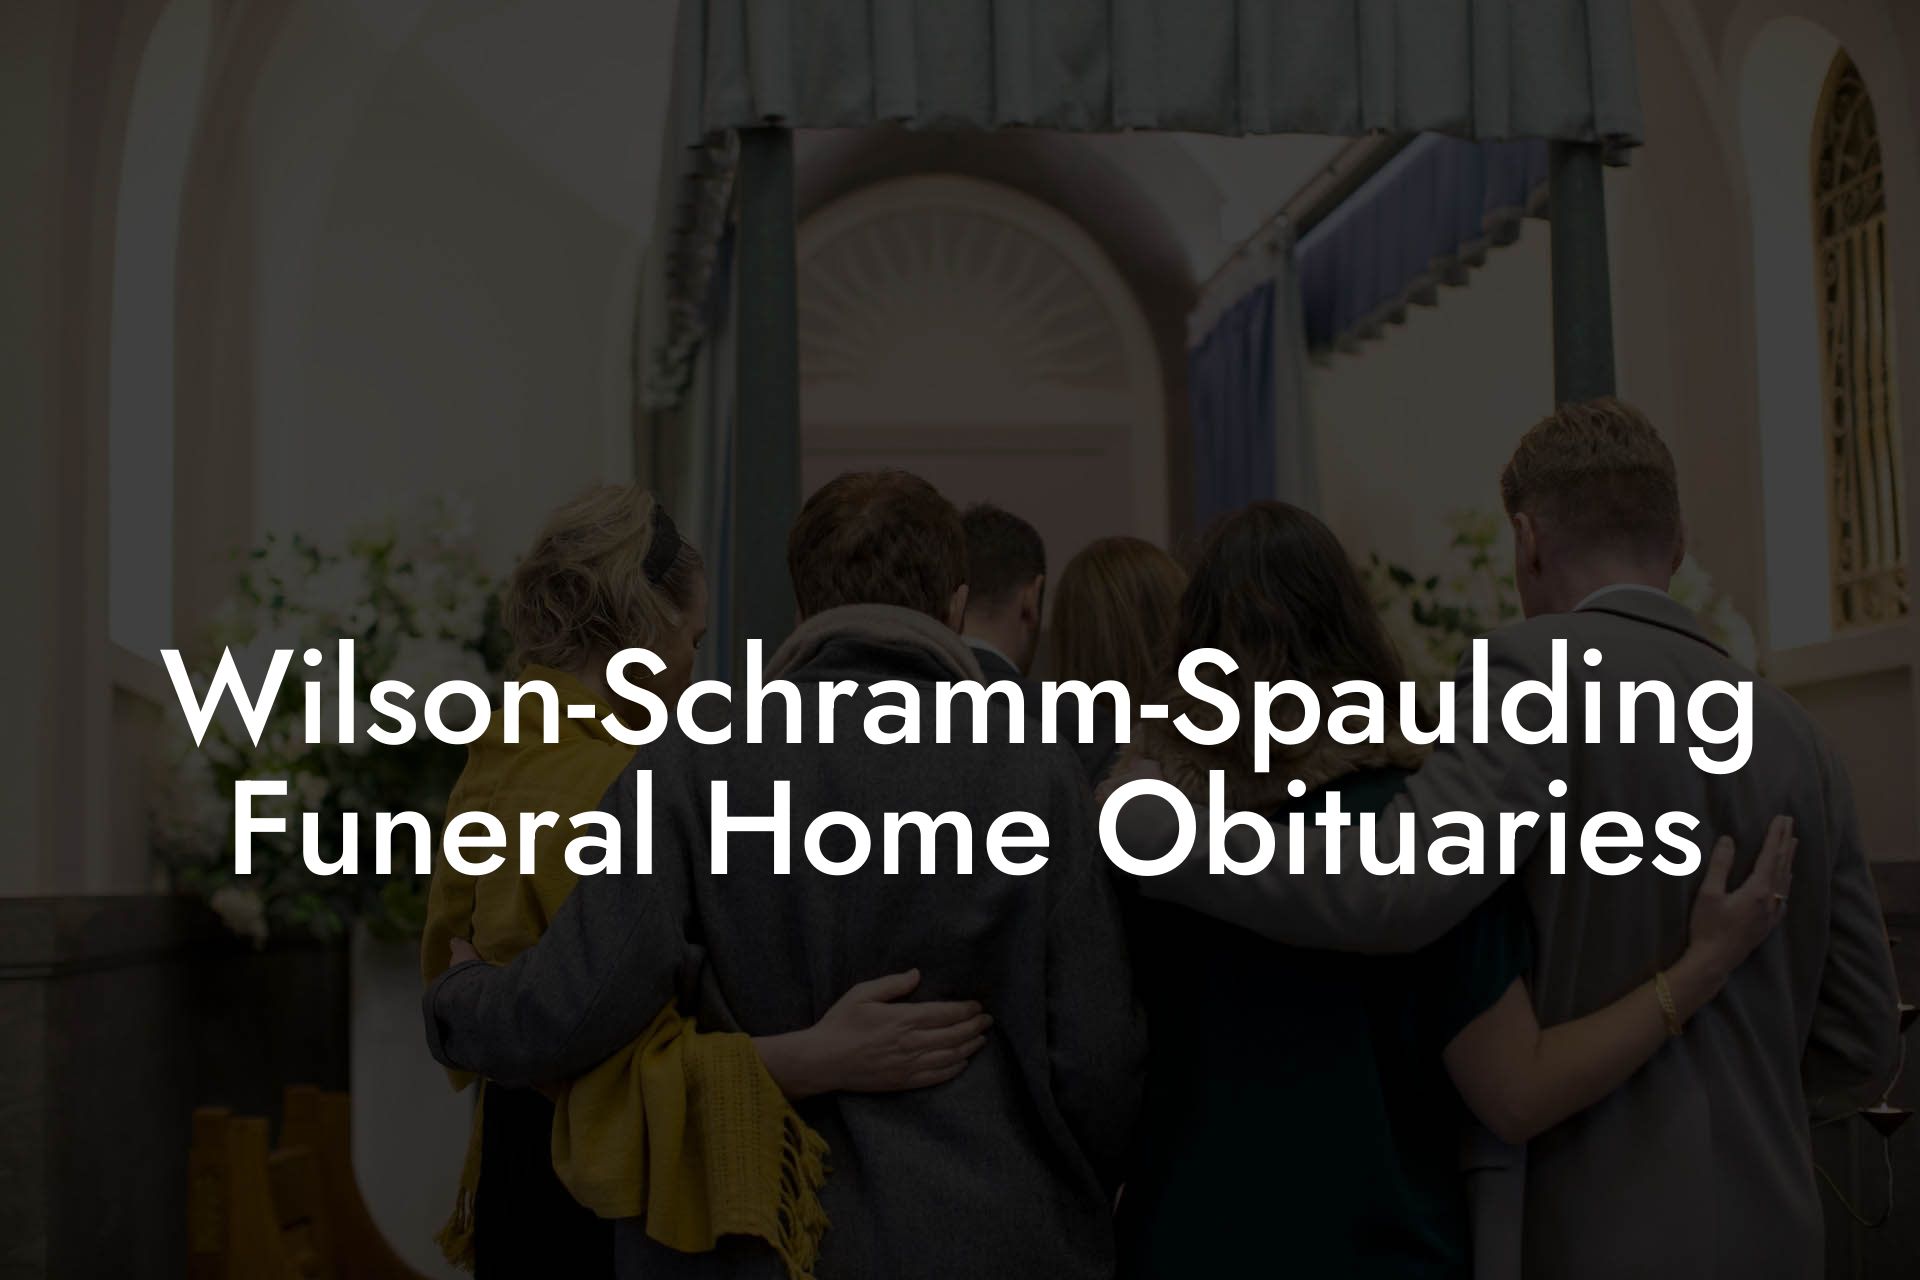 Wilson-Schramm-Spaulding Funeral Home Obituaries